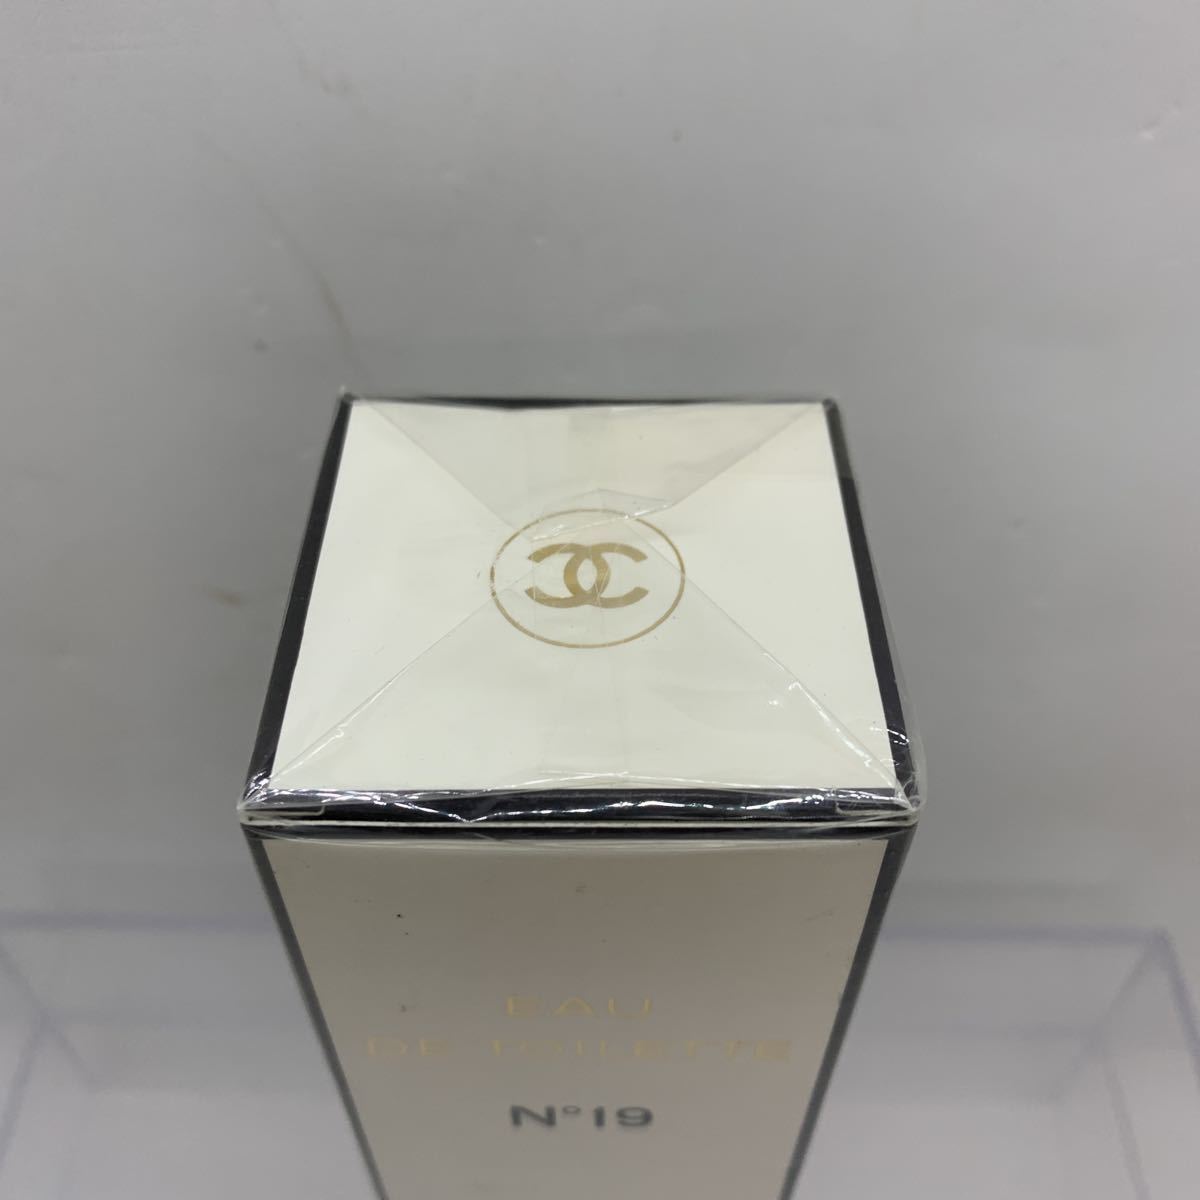  perfume new goods unused unopened CHANEL Chanel N°19 50ml 2208114